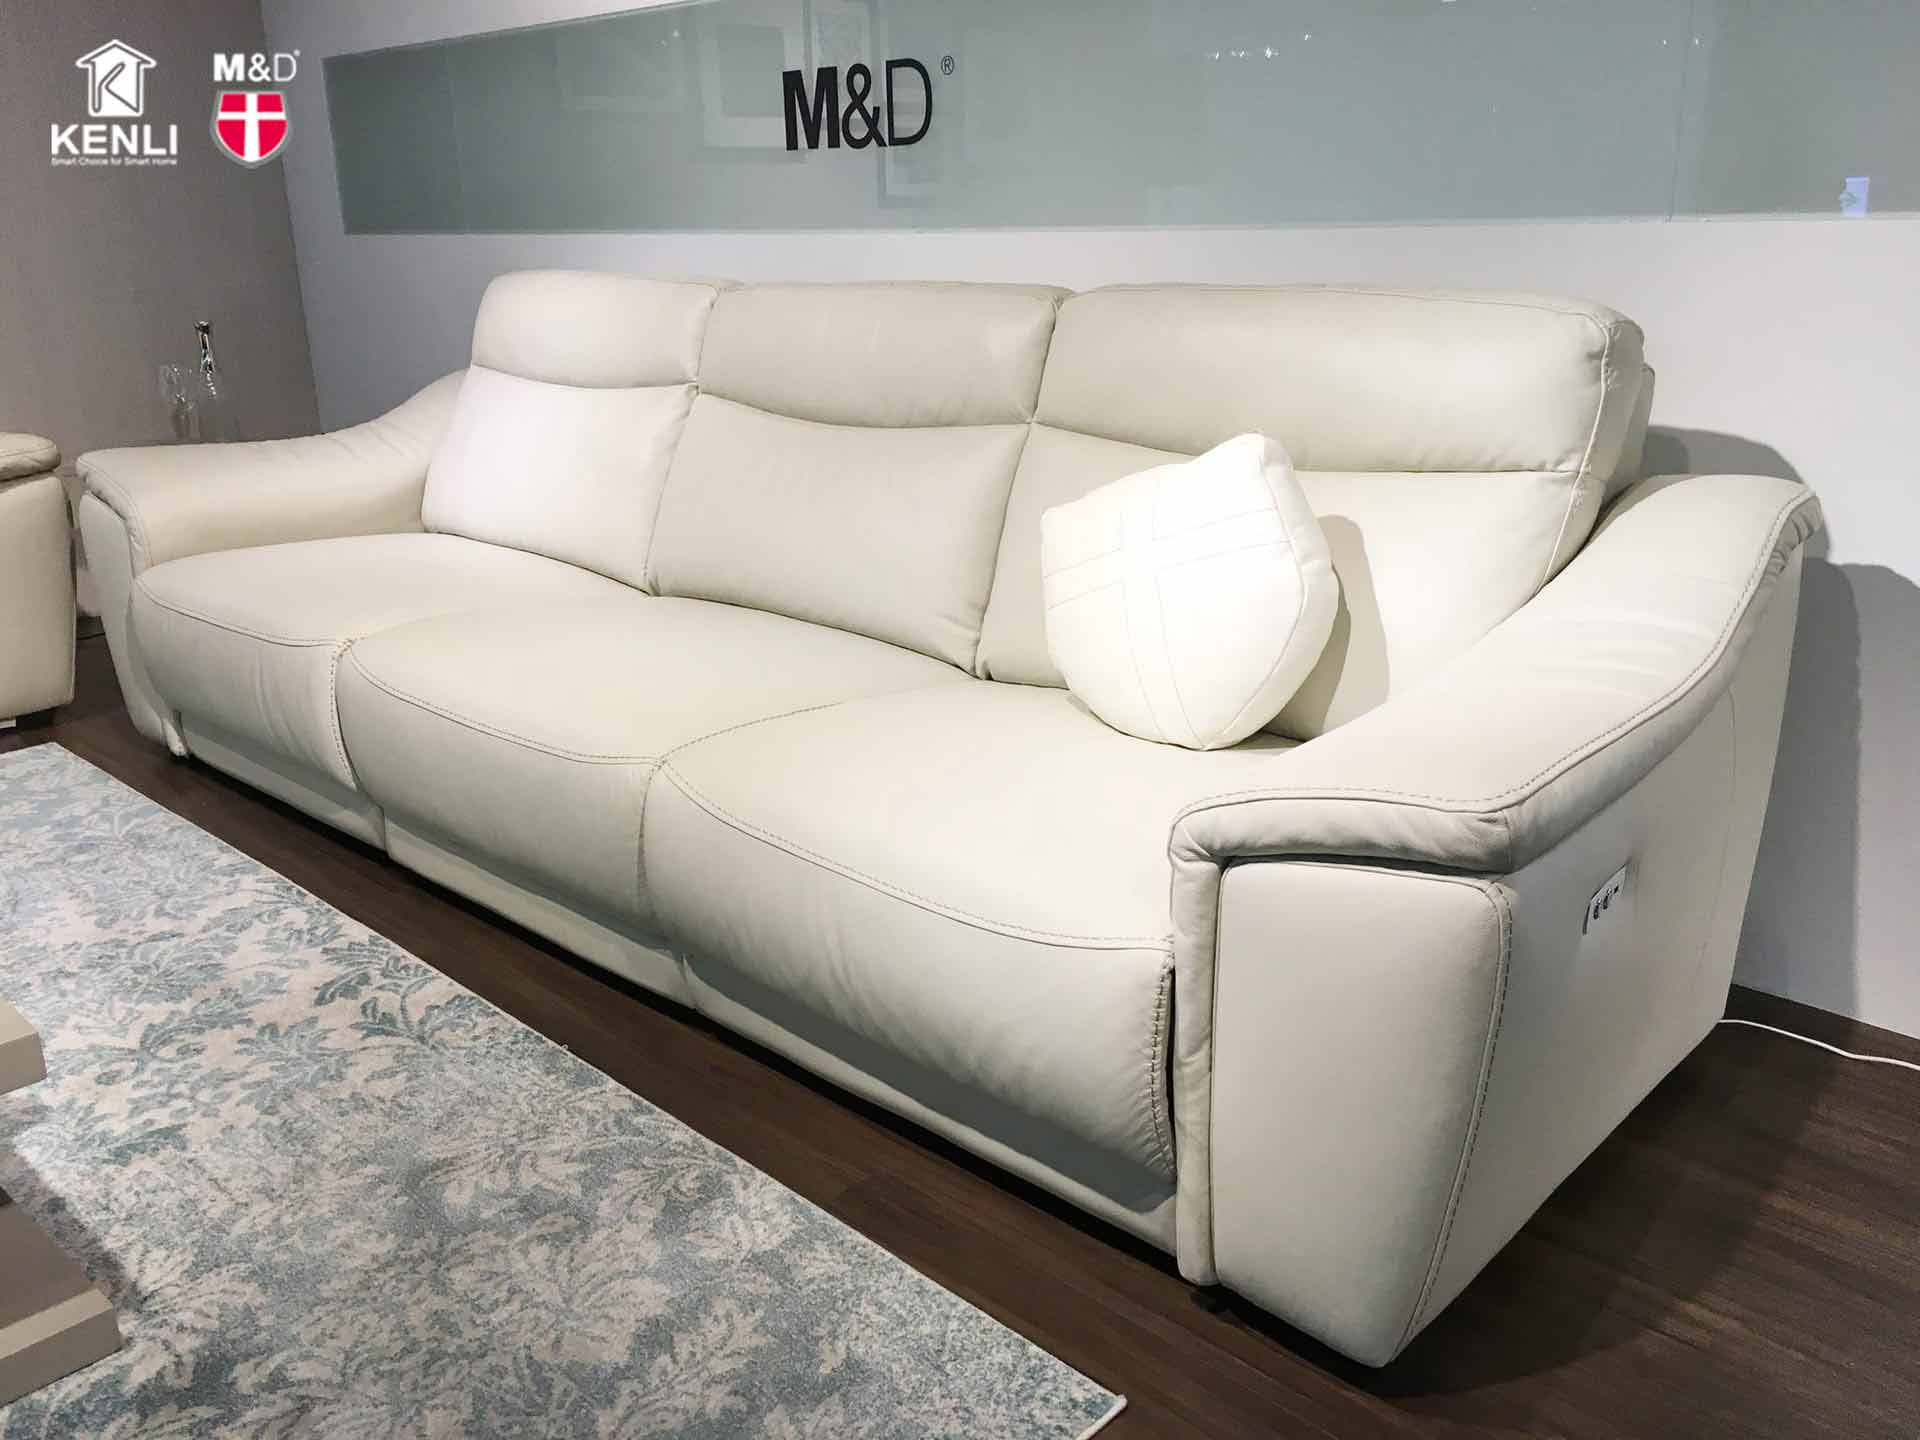 Sofa da trắng